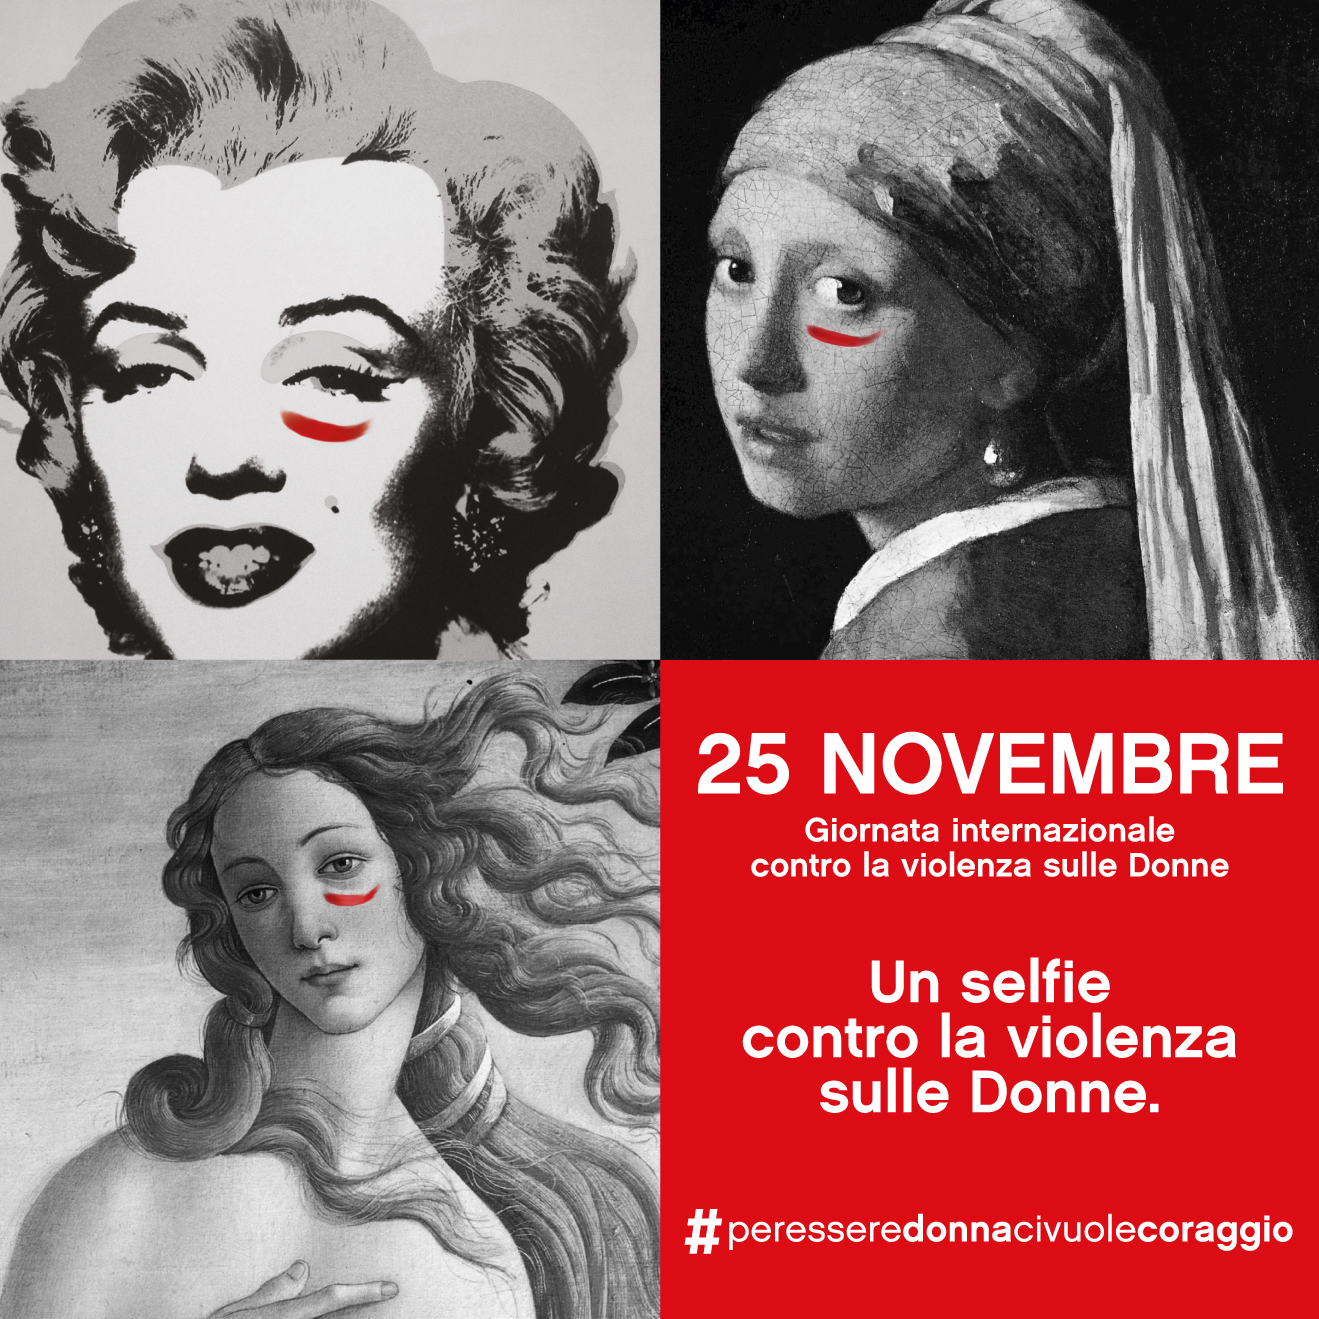 25 Novembre - Un selfie contro la violenza sulle donne